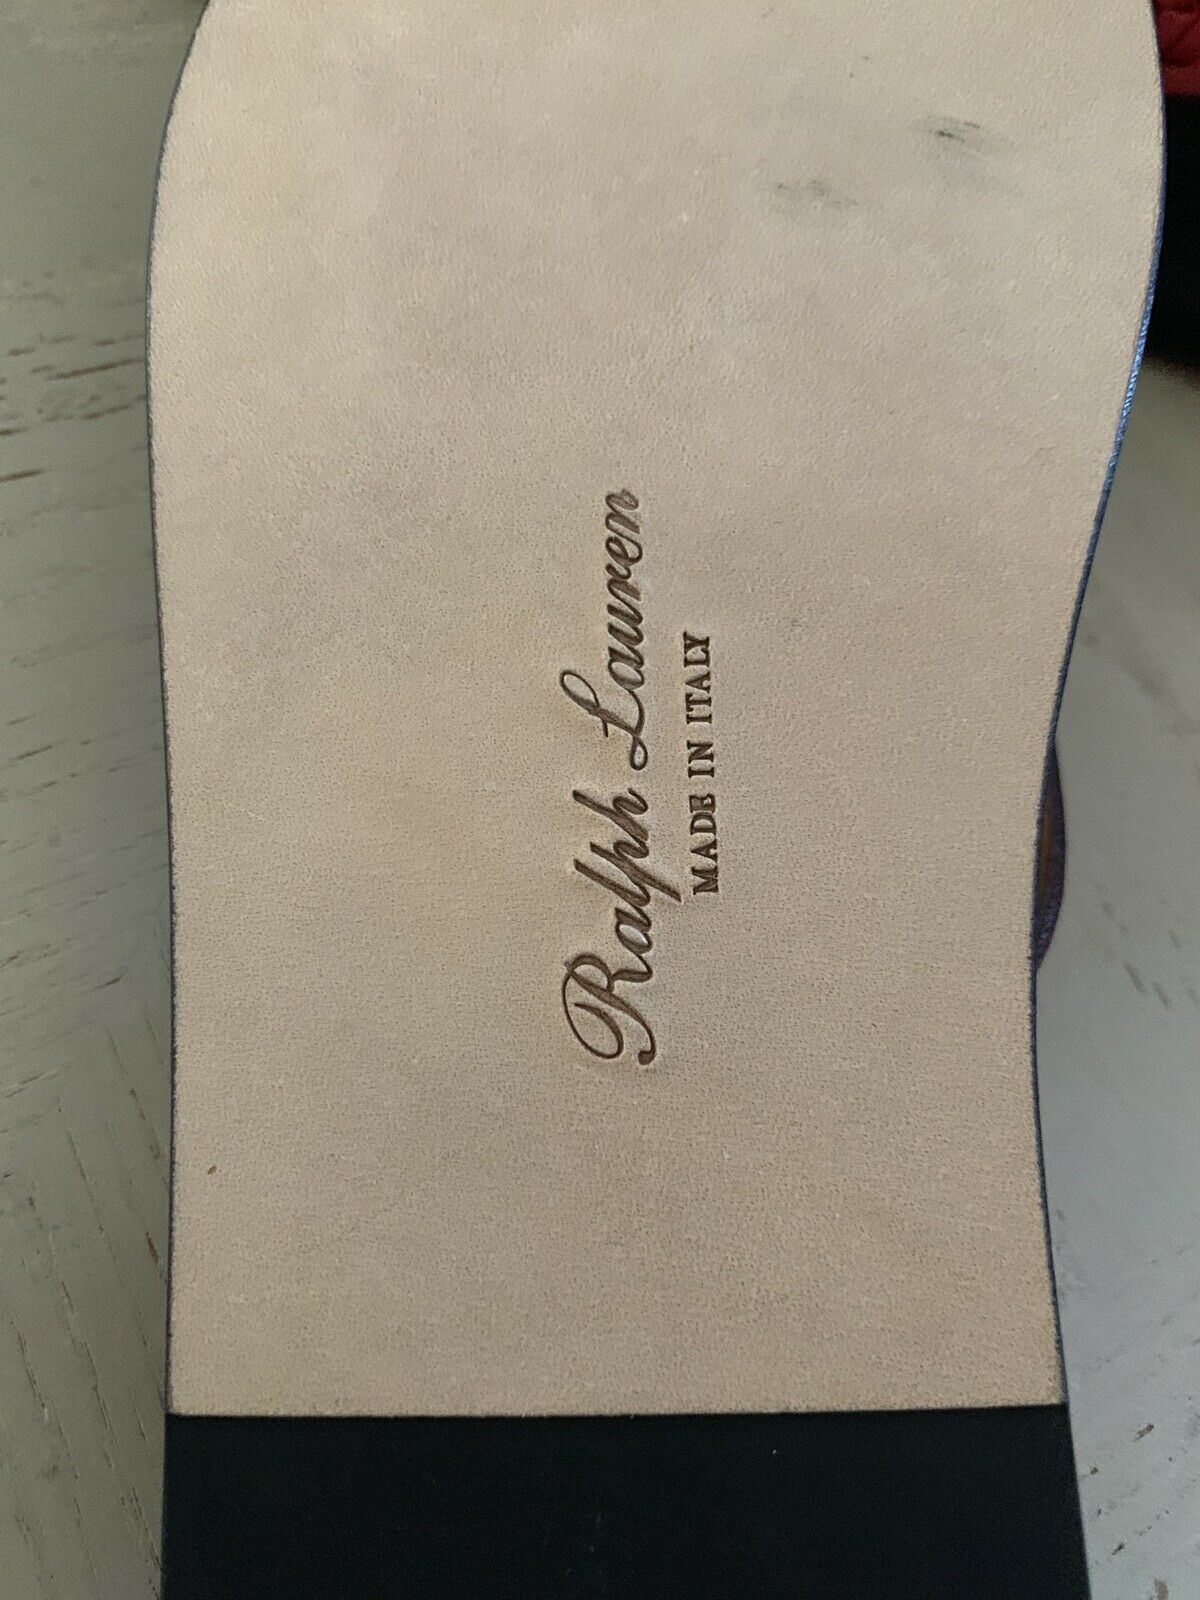 New $495 Ralph Lauren Purple Label Mens Vachetta Leather Sandal Red 8.5 US